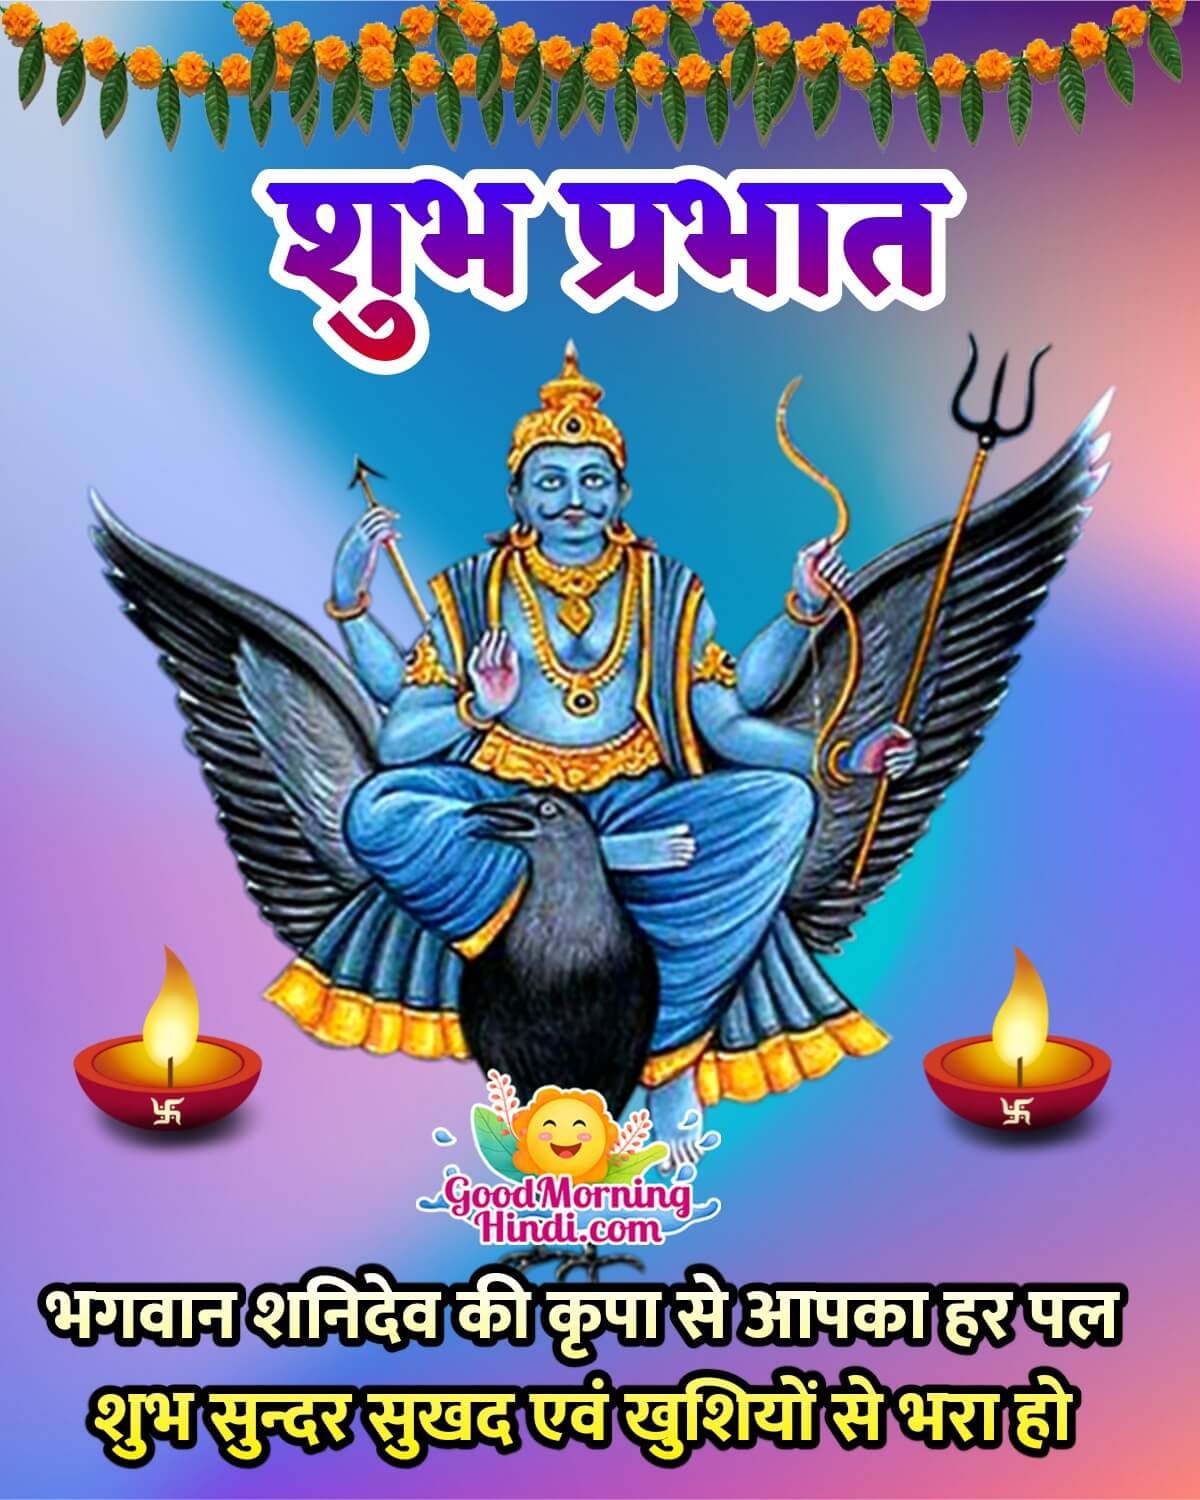 Shubh Prabhat Shanidev Wishes